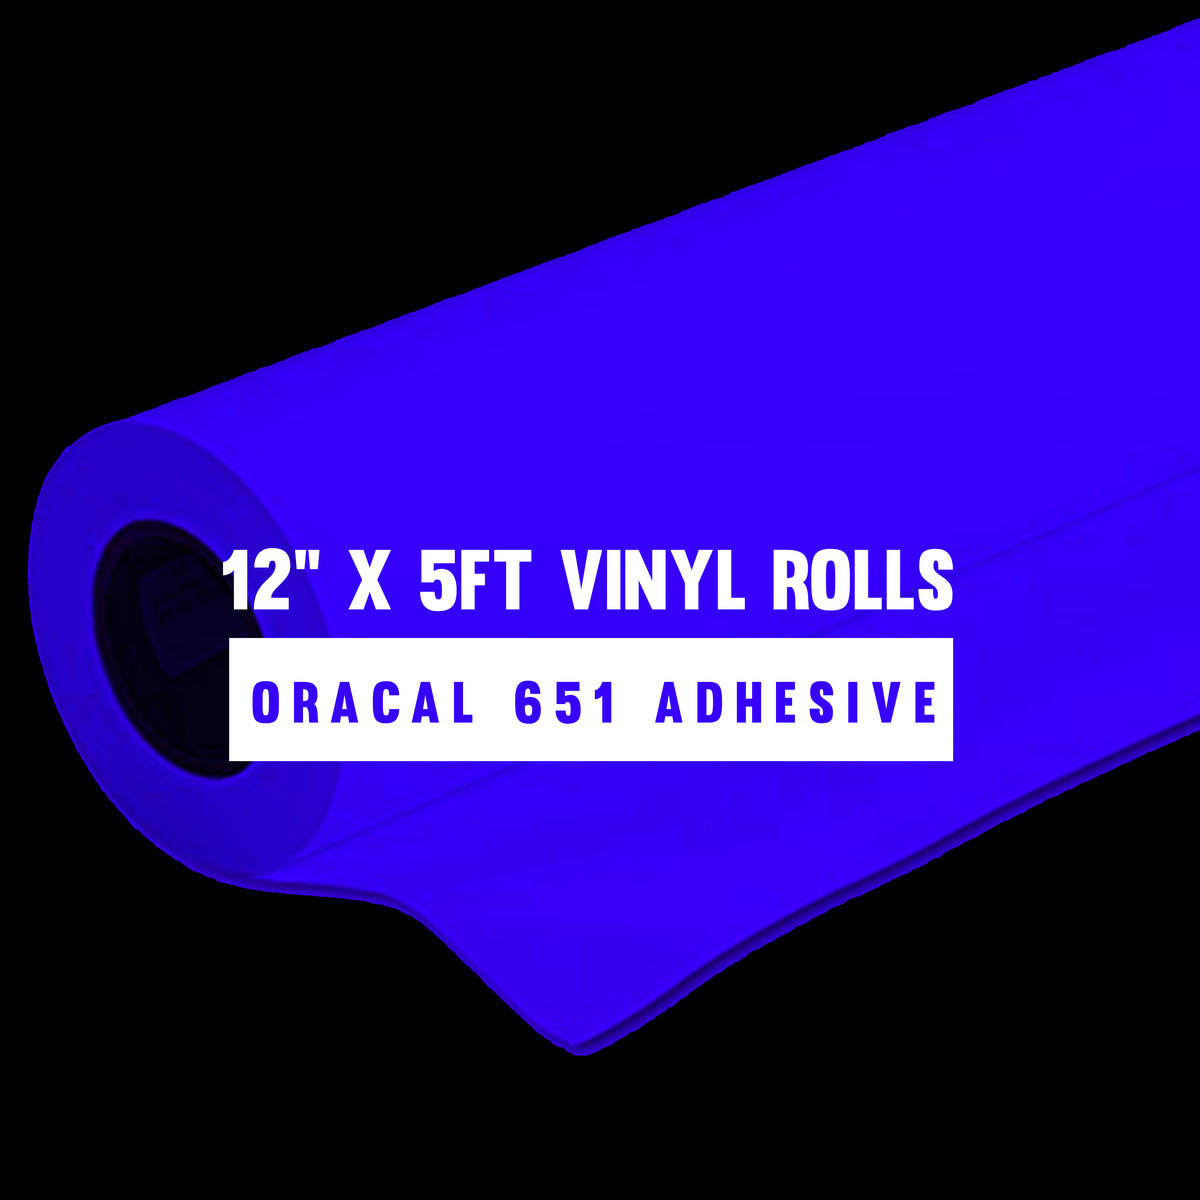 Permanent Adhesive Vinyl Roll - 12x5 ft (35 Colors), Light Yellow